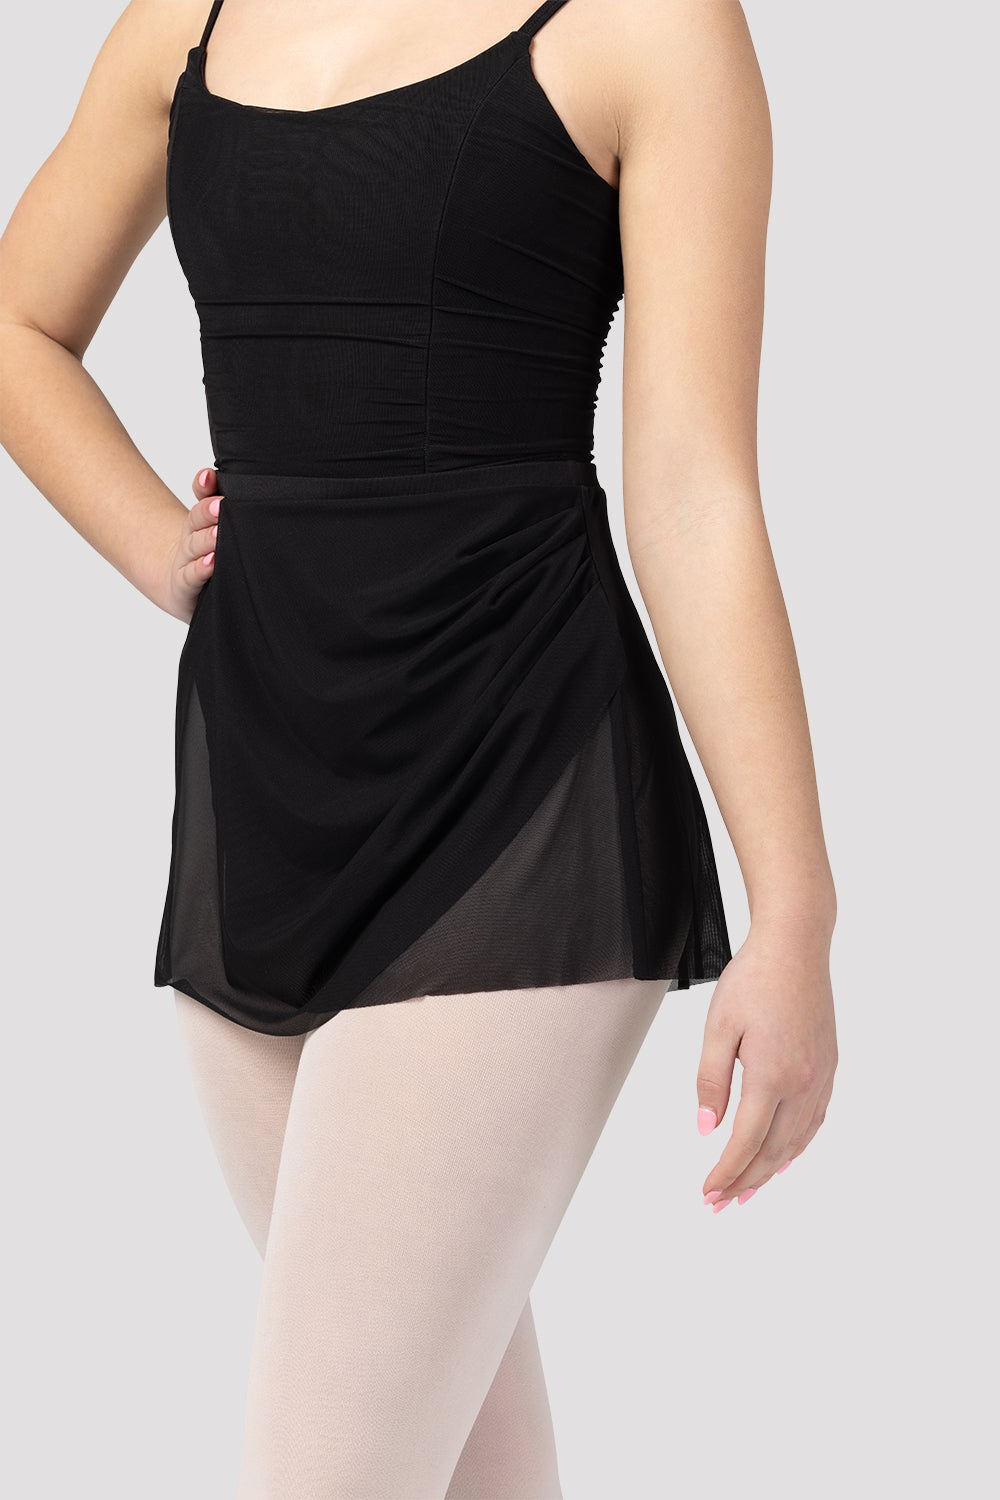 Ladies Fifi Seamed Mesh Frill Skirt, Black – BLOCH Dance US